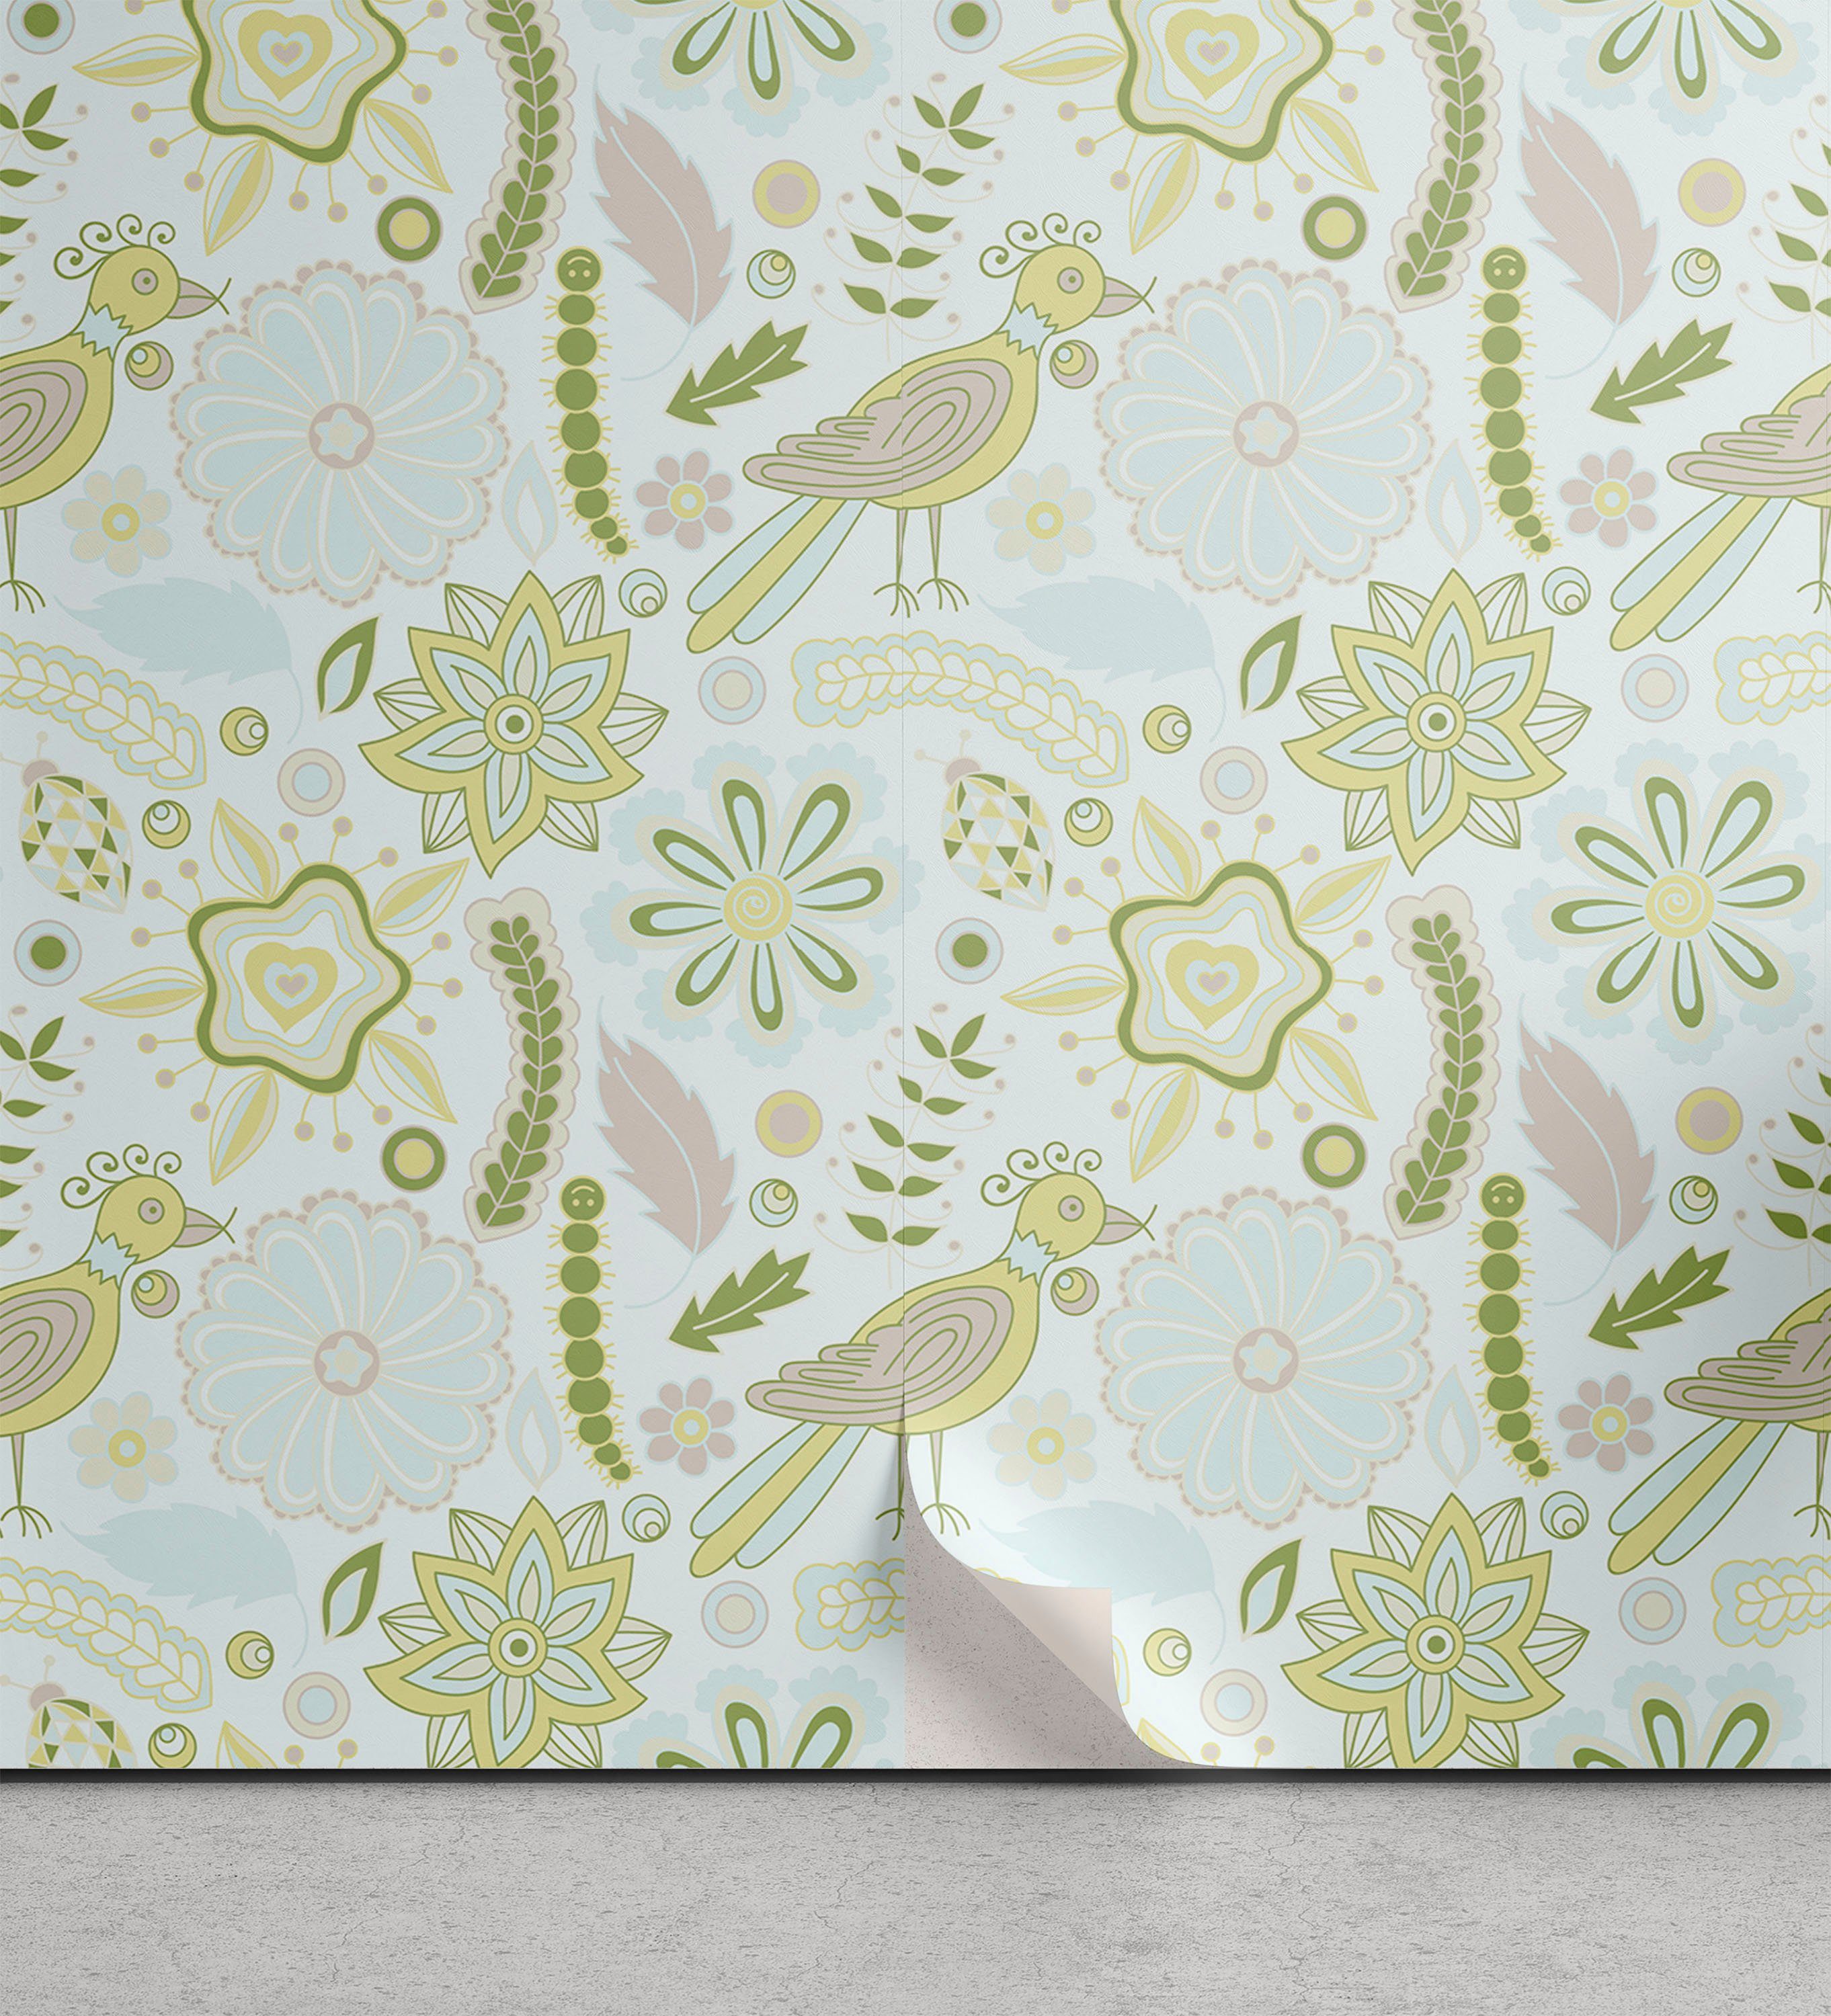 Abakuhaus Vinyltapete selbstklebendes Wohnzimmer Küchenakzent, Raupe Gekritzel-Blumen-Vögel